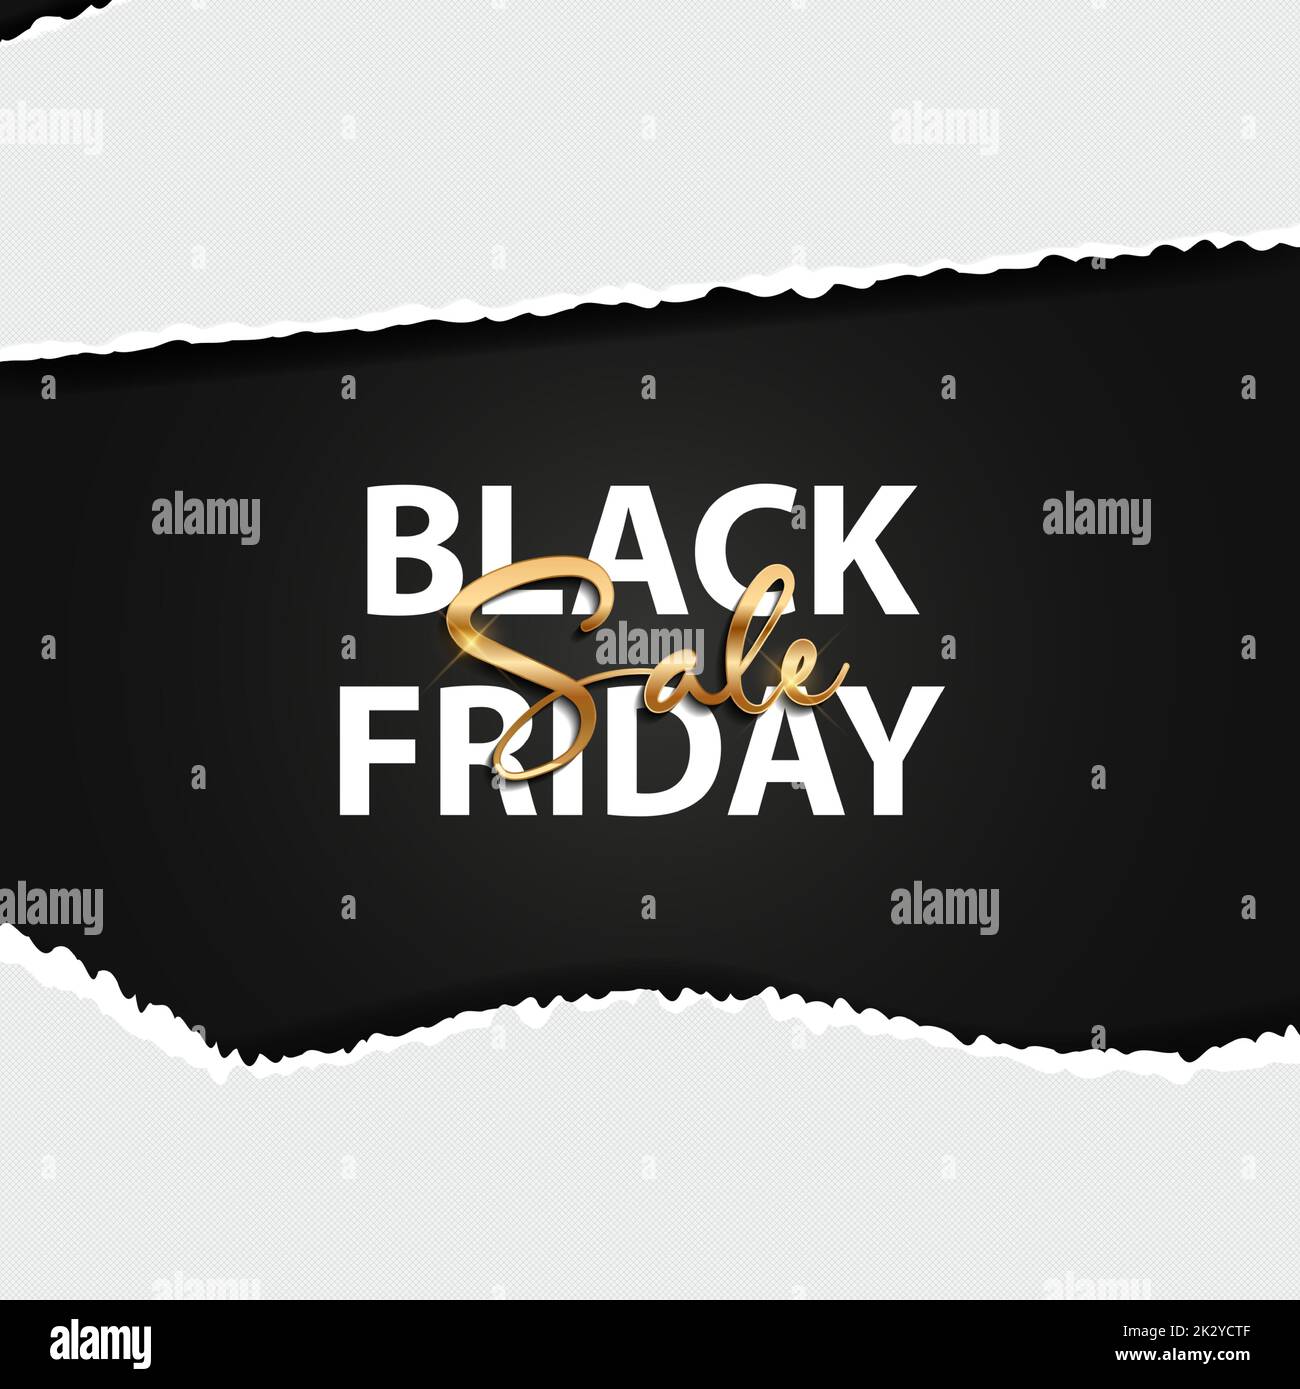 Black Friday Sale Invitation Card. Vector Illustration EPS10 Stock Vector